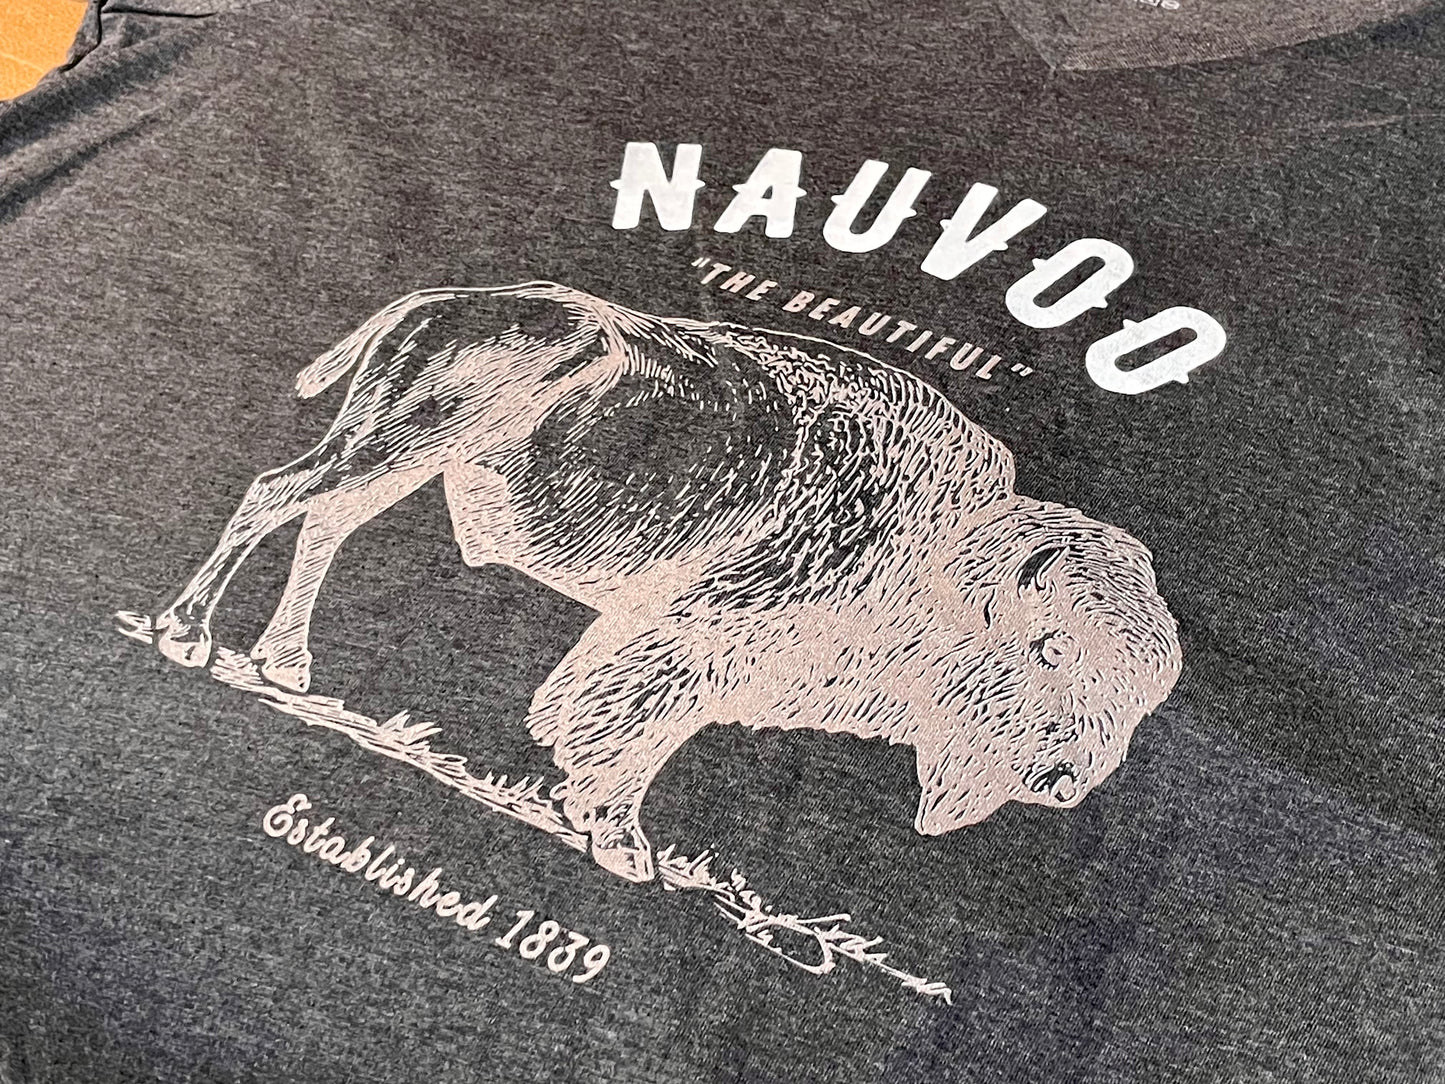 Men’s City of Nauvoo Illinois V-Neck T-shirt